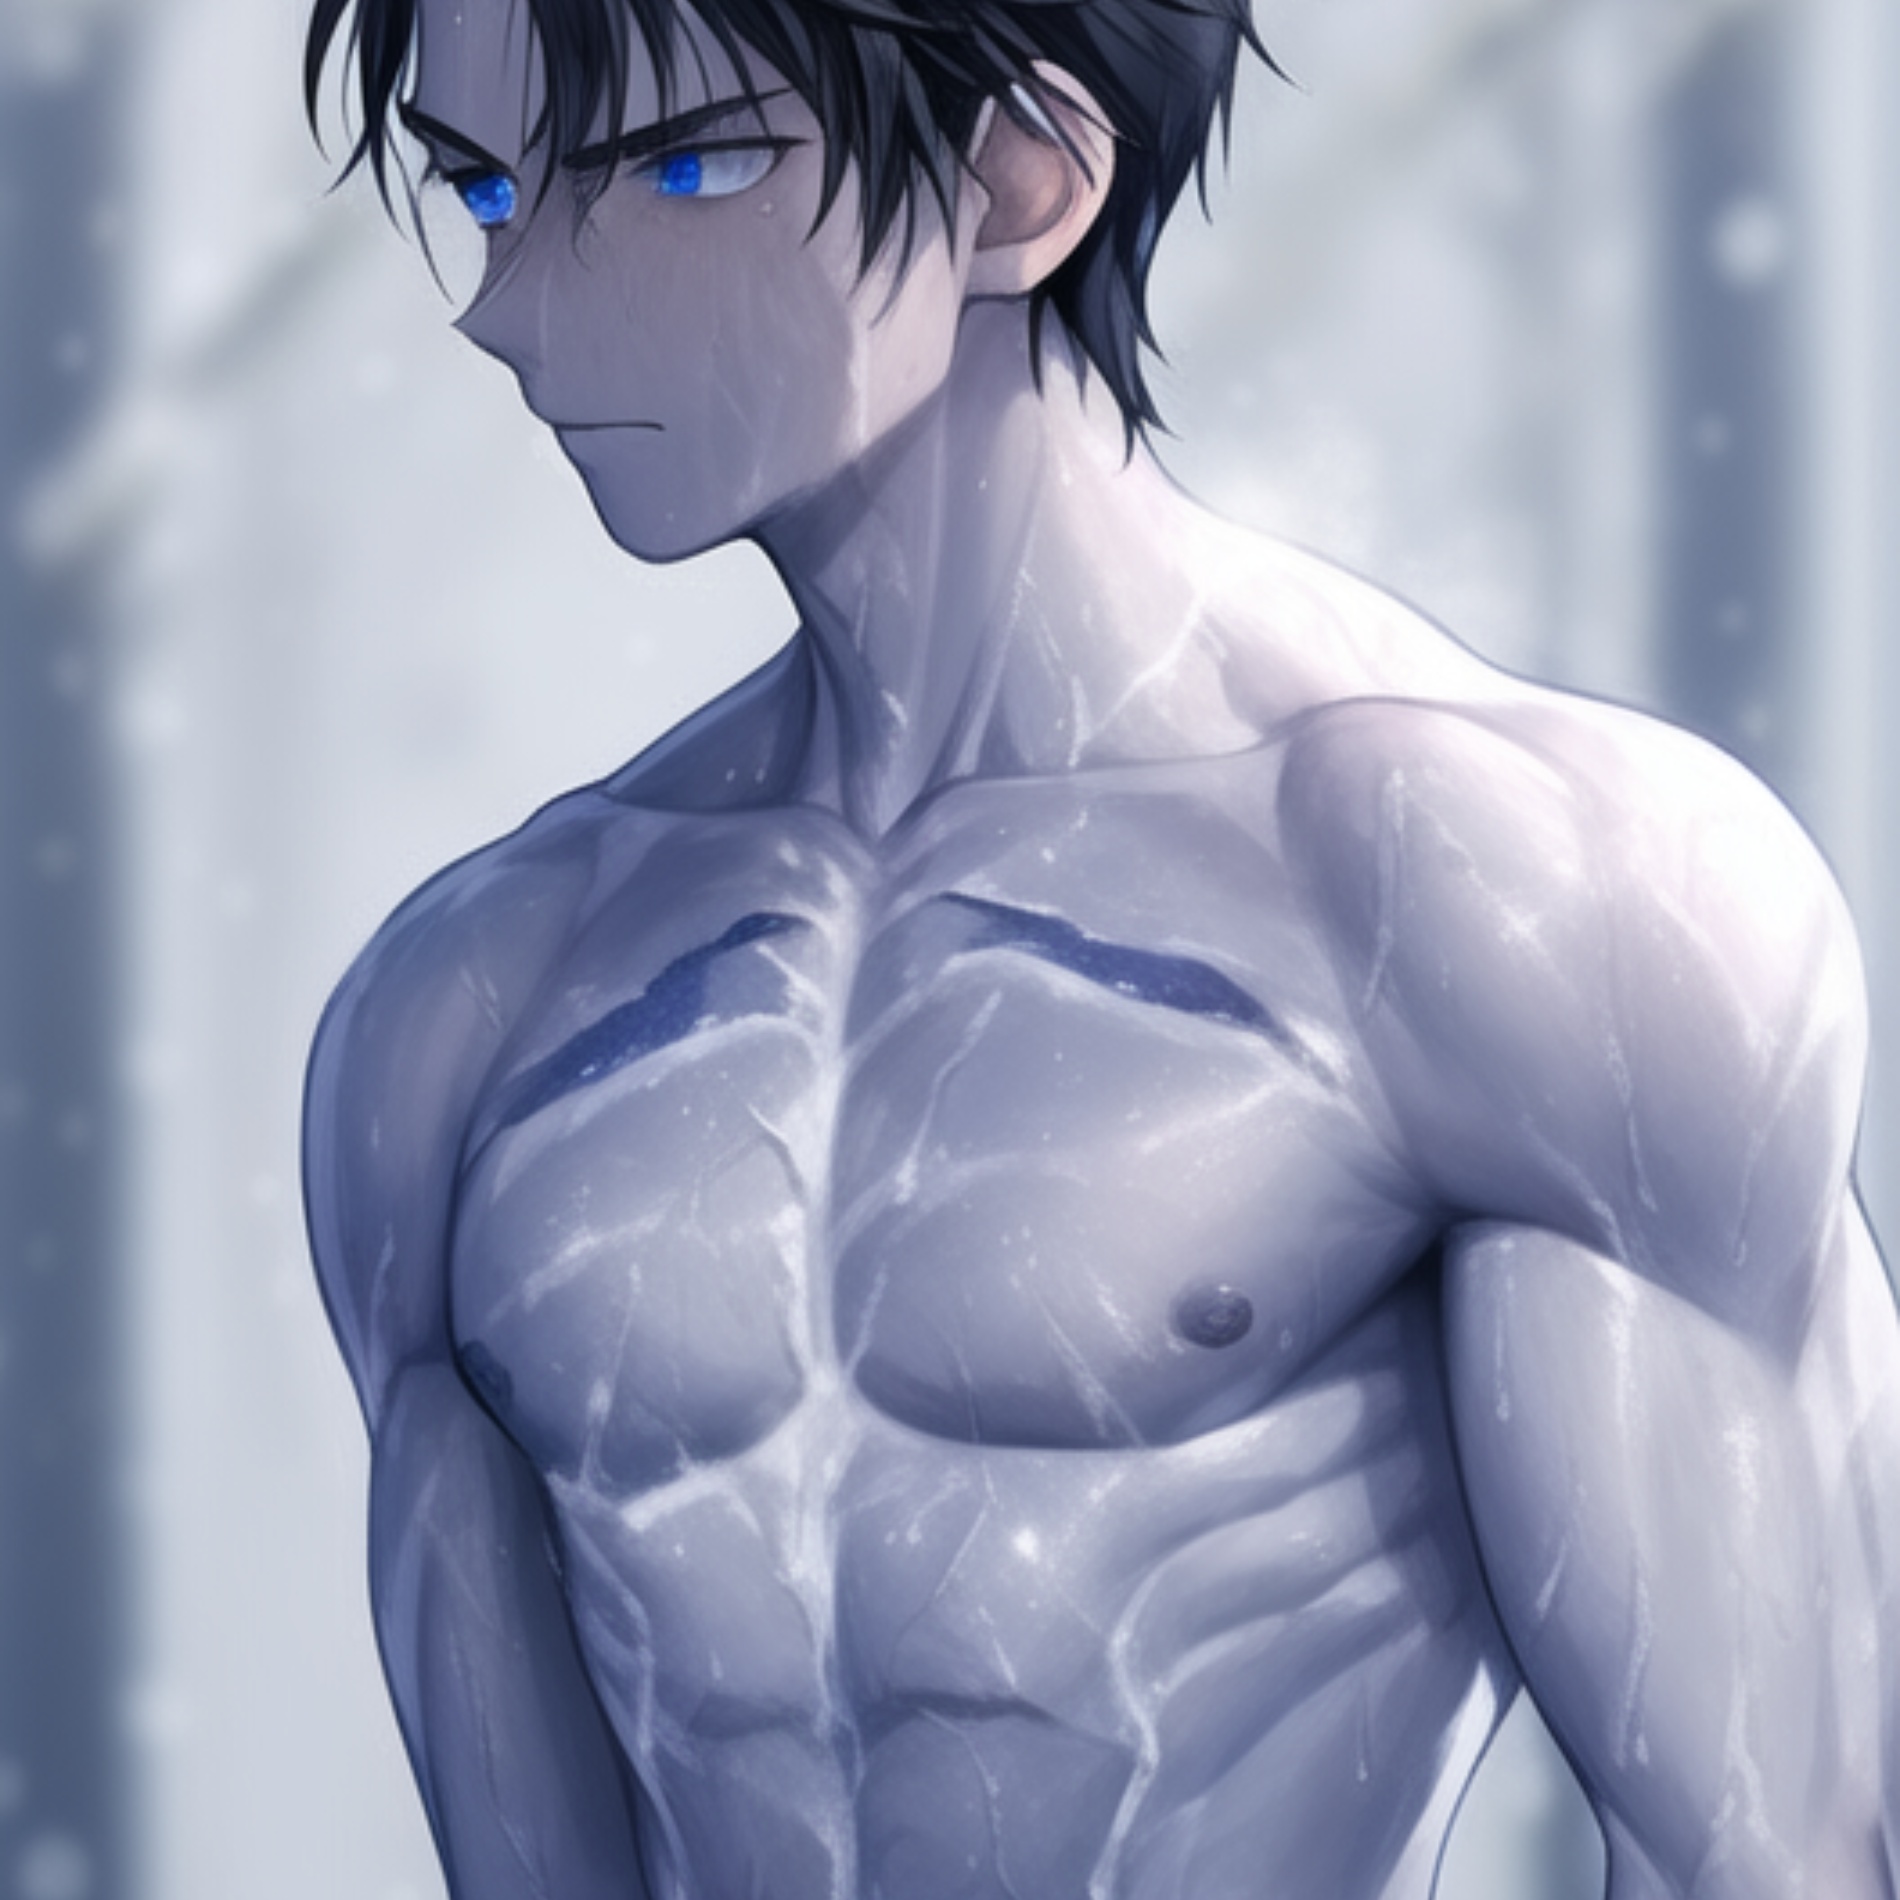 GYM Bodybuilder Anime Boy Profile Pic